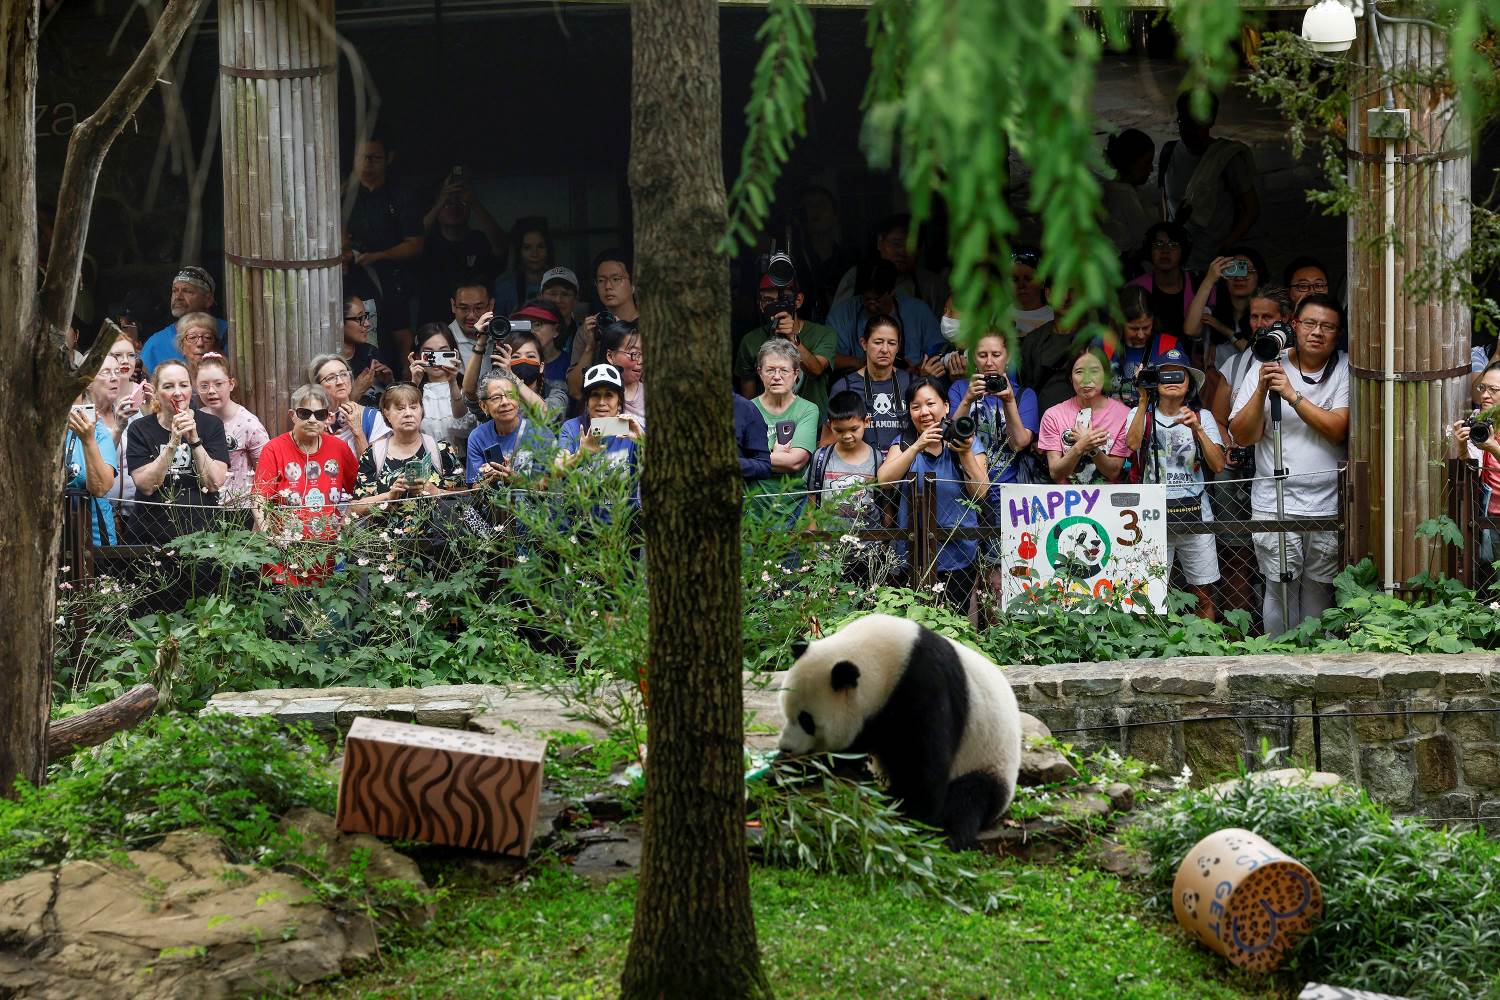 16-facts-about-panda-exhibit